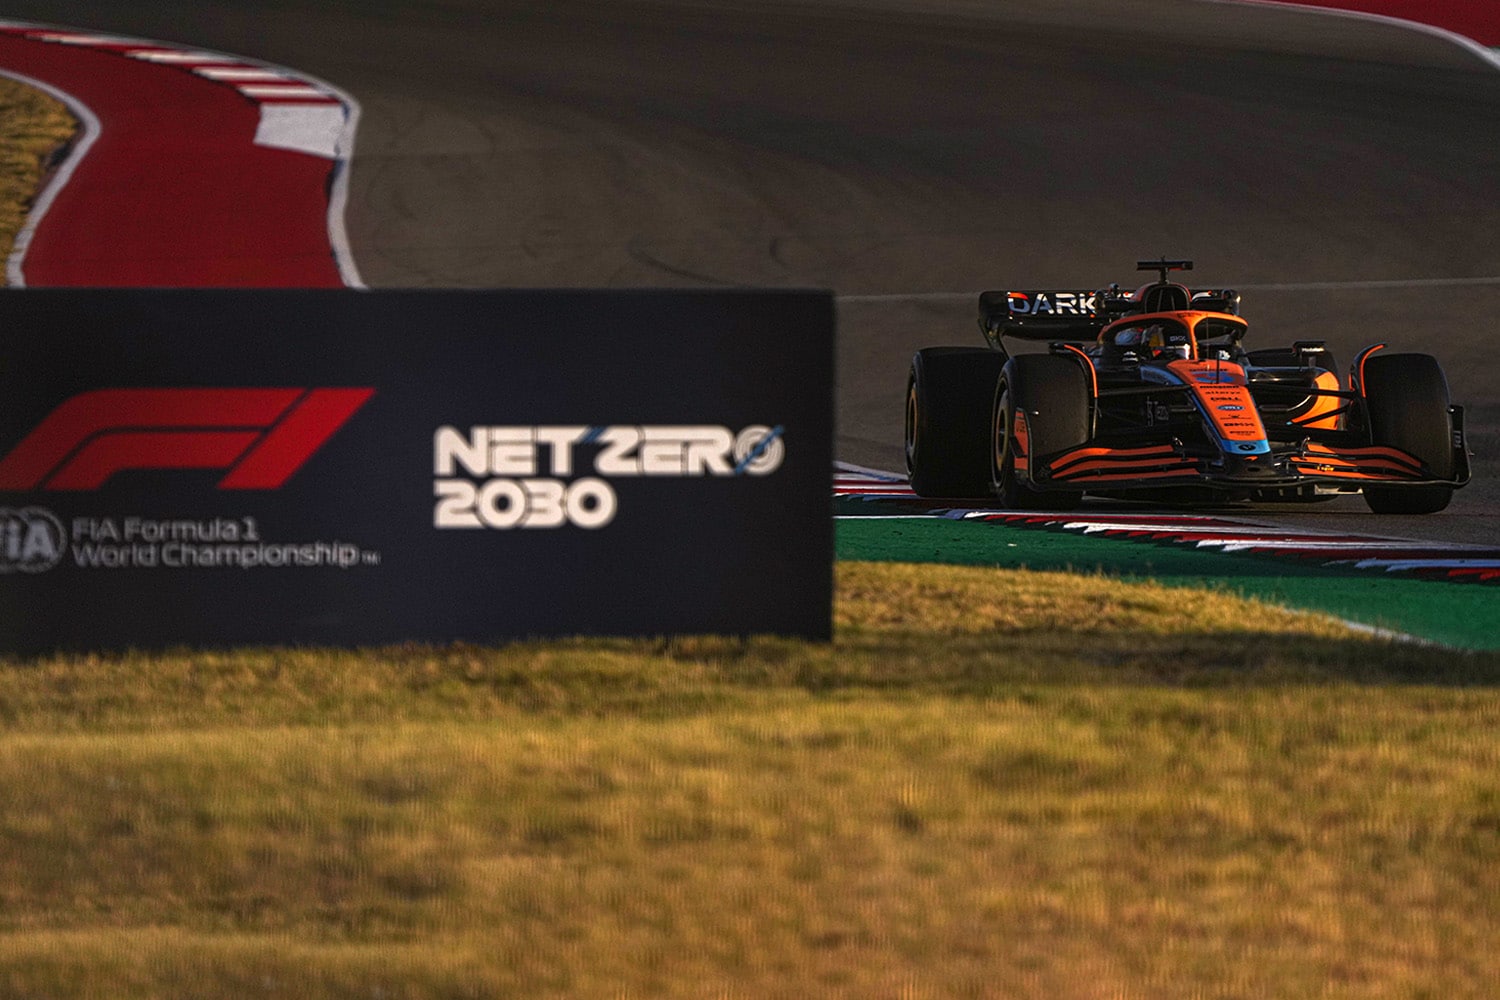 The McLaren F1 car drives past a sign for the FIA's F1 Net Zero 2030 initiative.